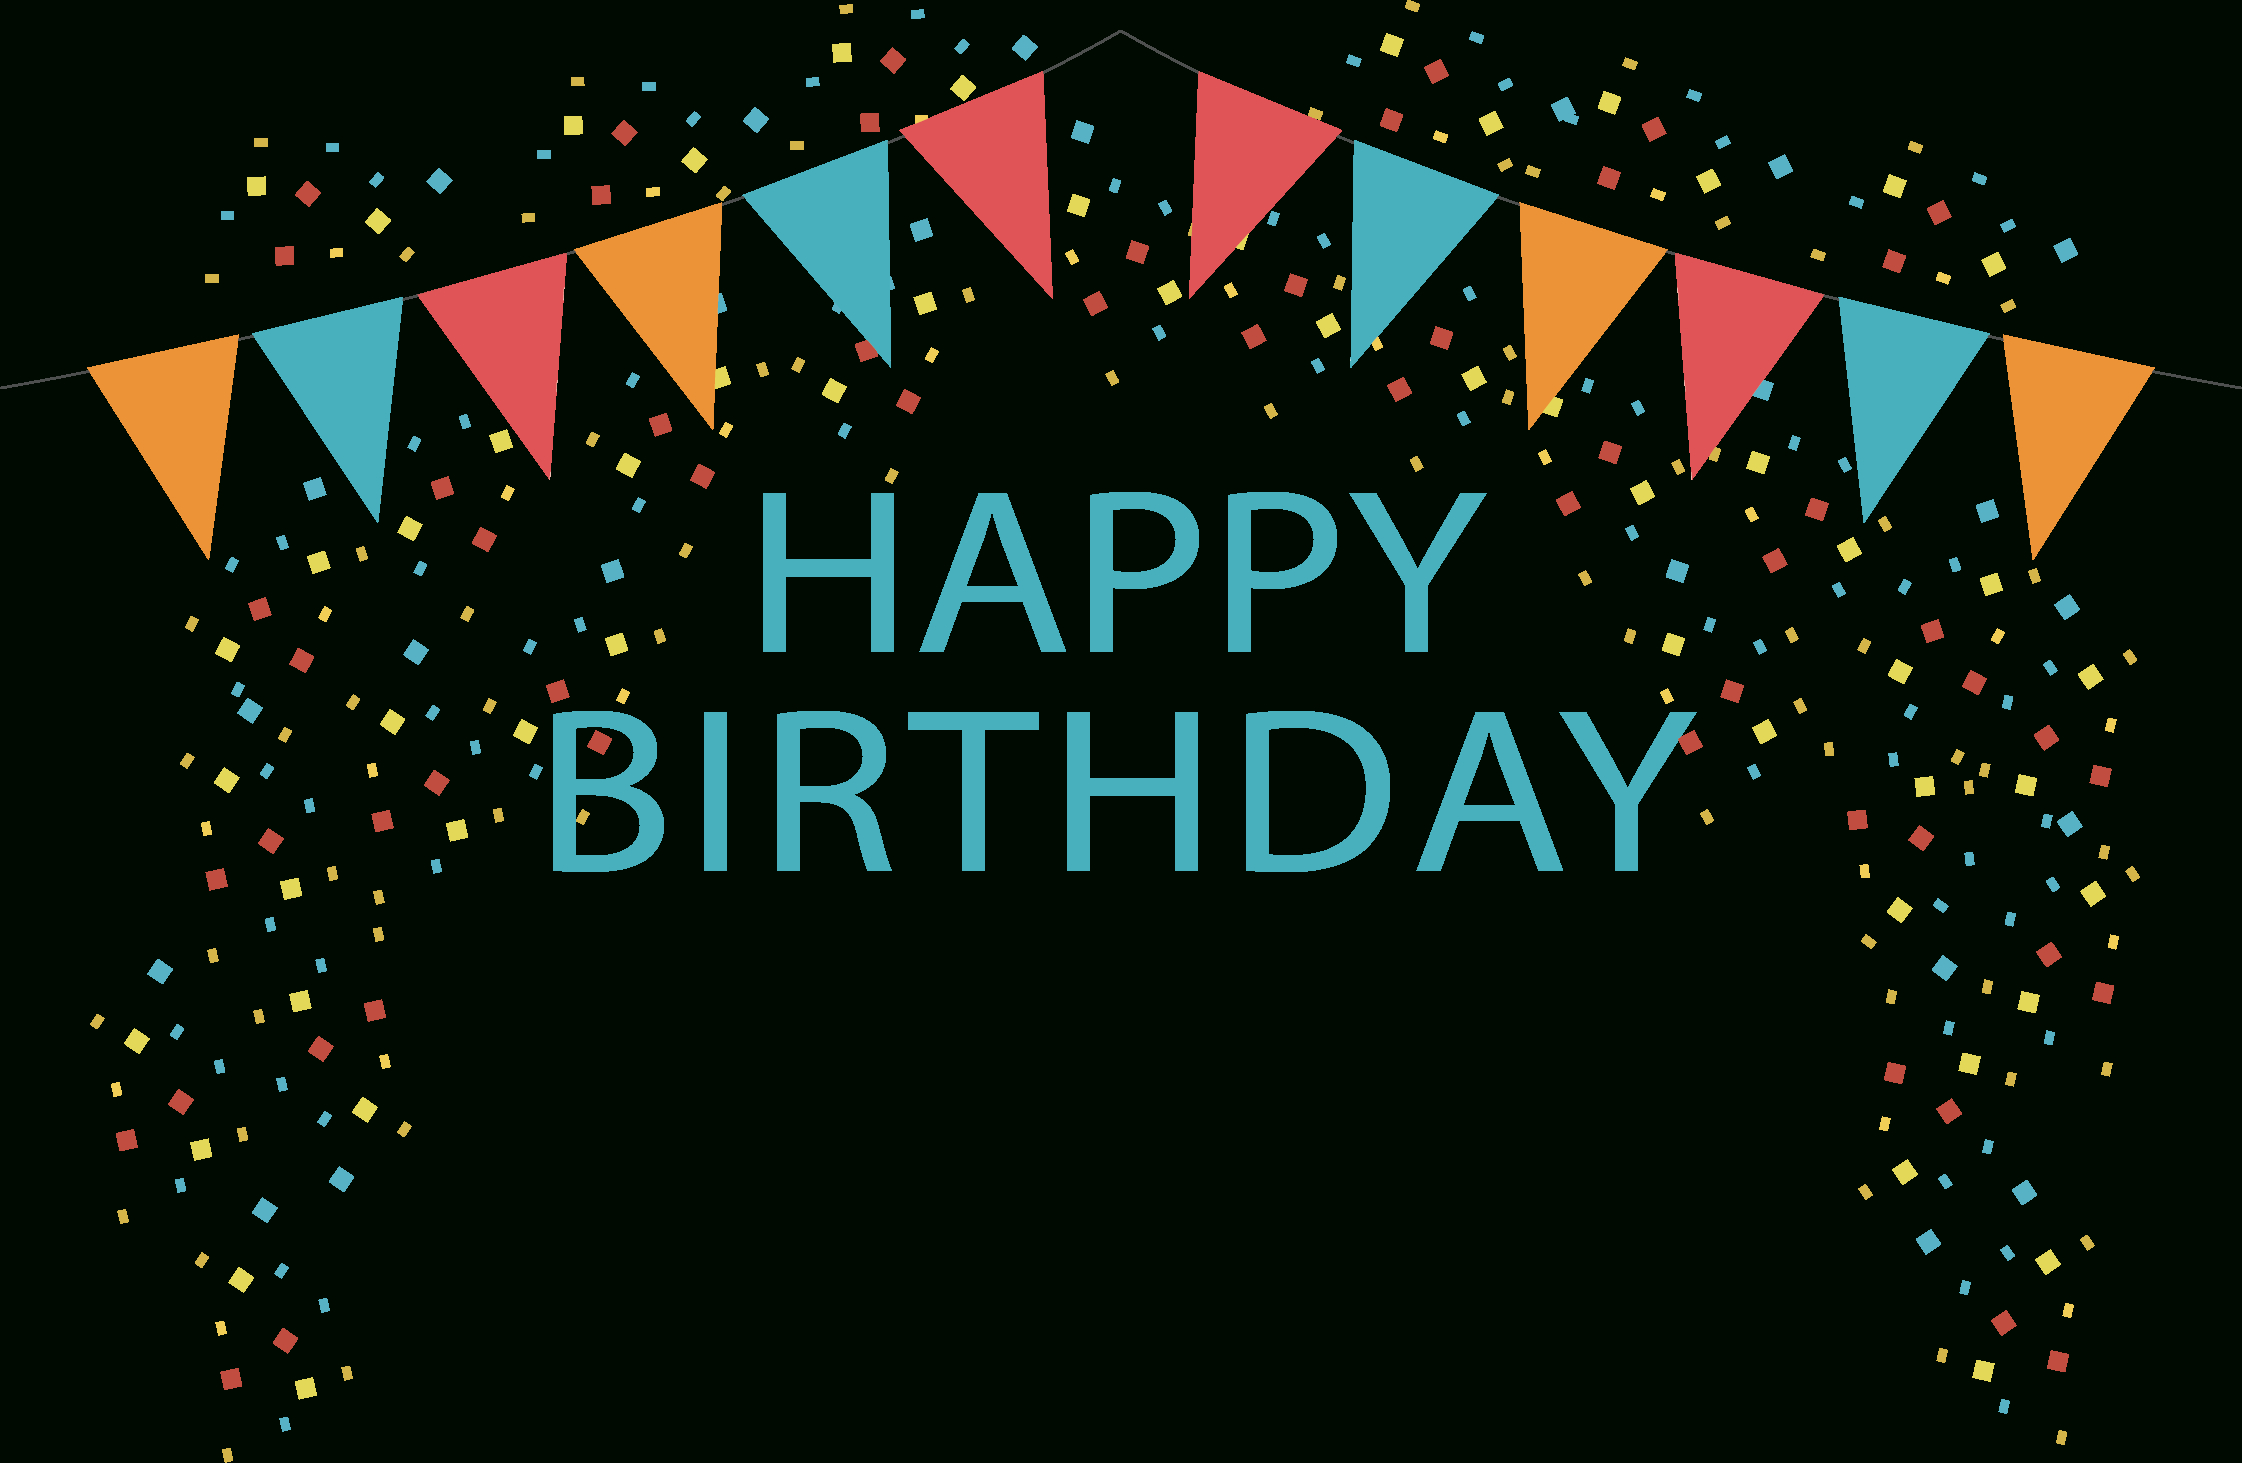 Happy Birthday Banner Designs Free Download – Yeppe Regarding Free Happy Birthday Banner Templates Download